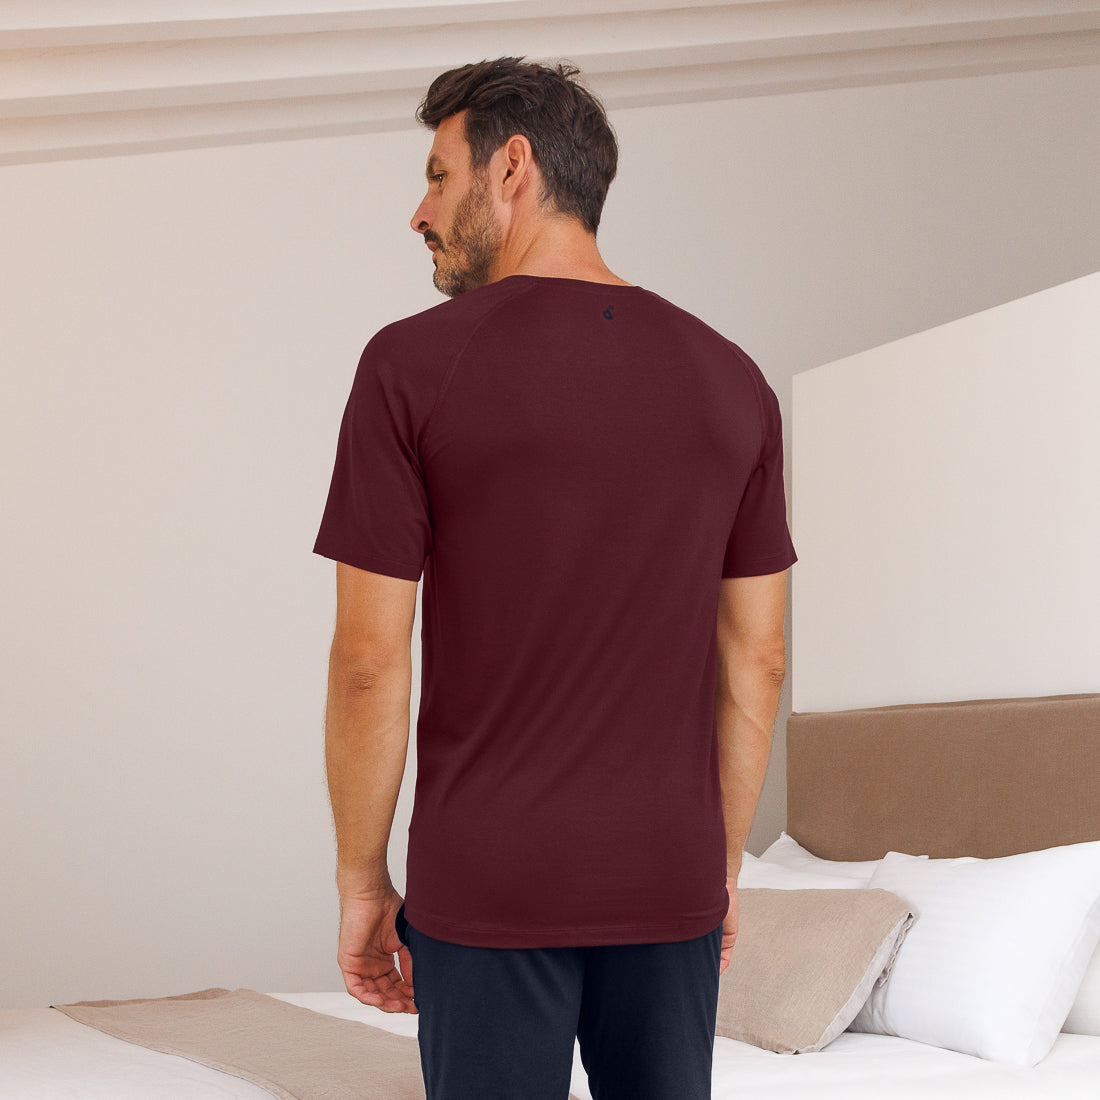 Muscle recovery sleep t-shirt men || Burgundy